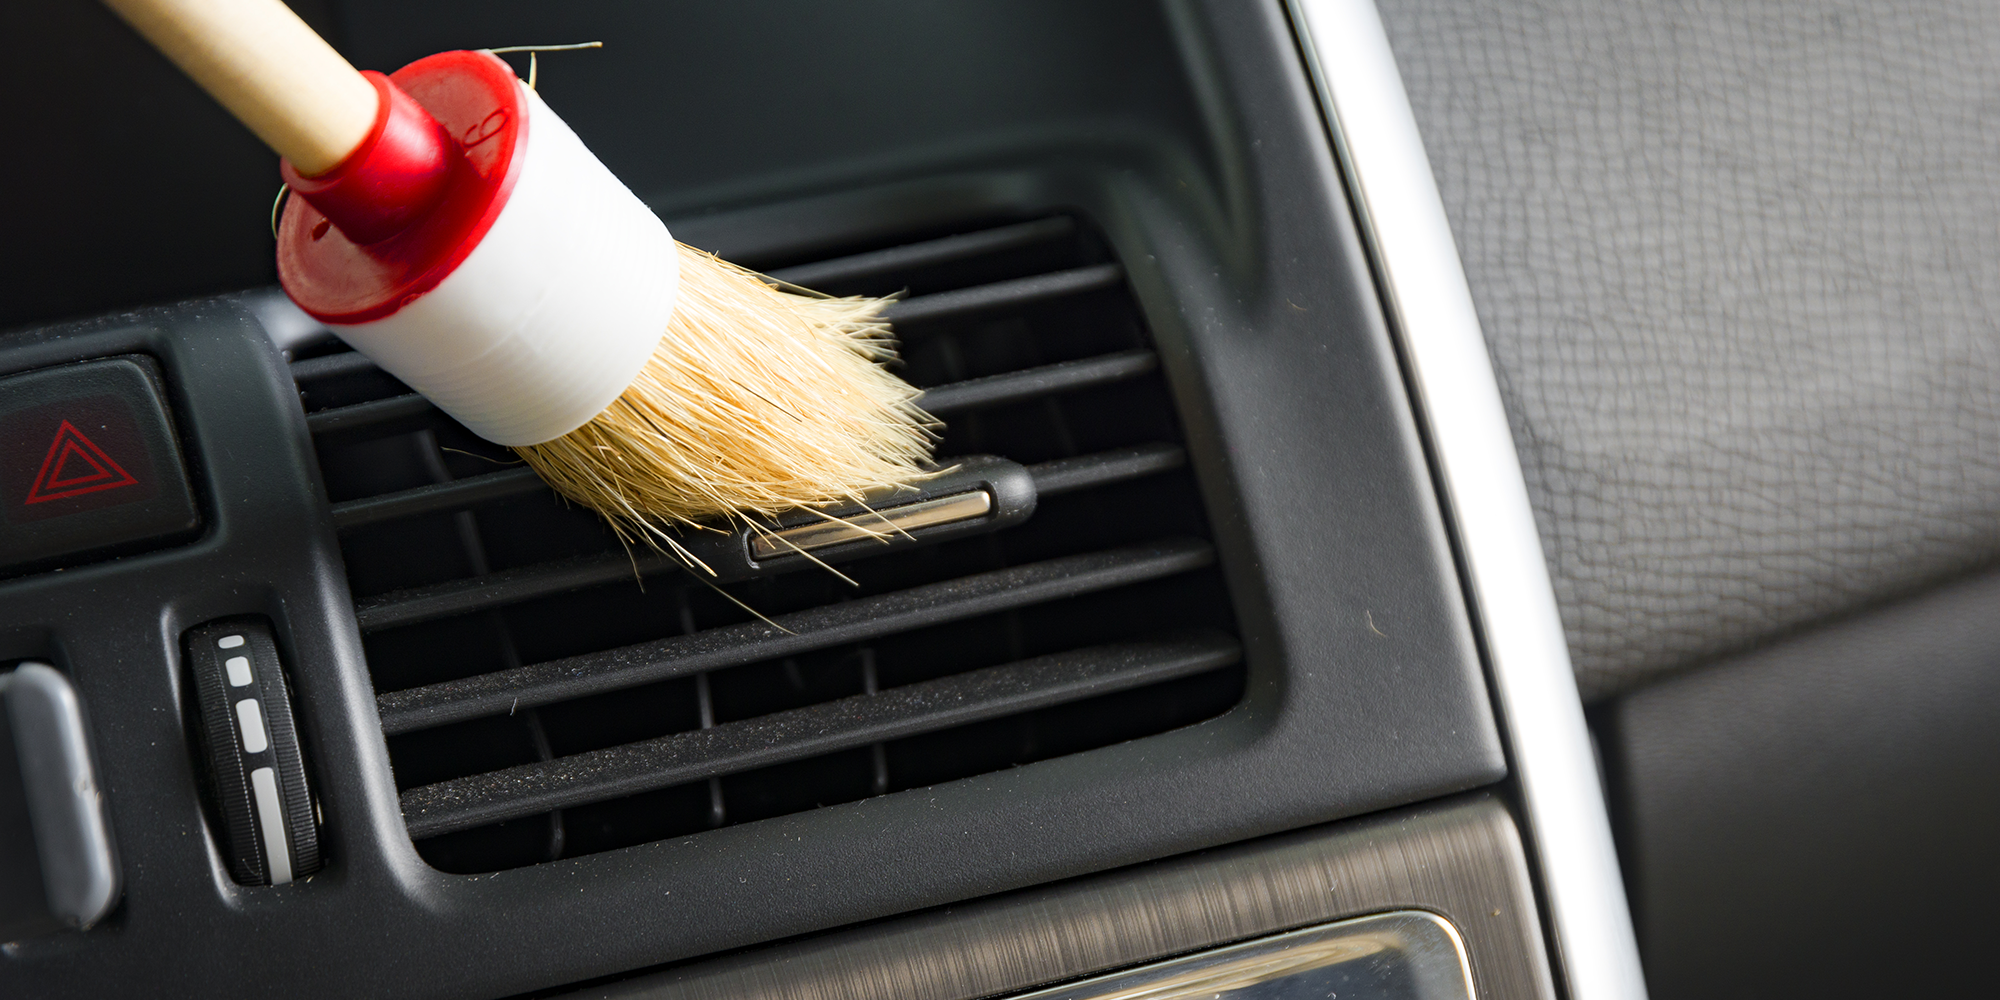 Anmelder lugt Elektrisk Den mest effektive måde at rense ventilationen i bilen - tobbermontage.dk